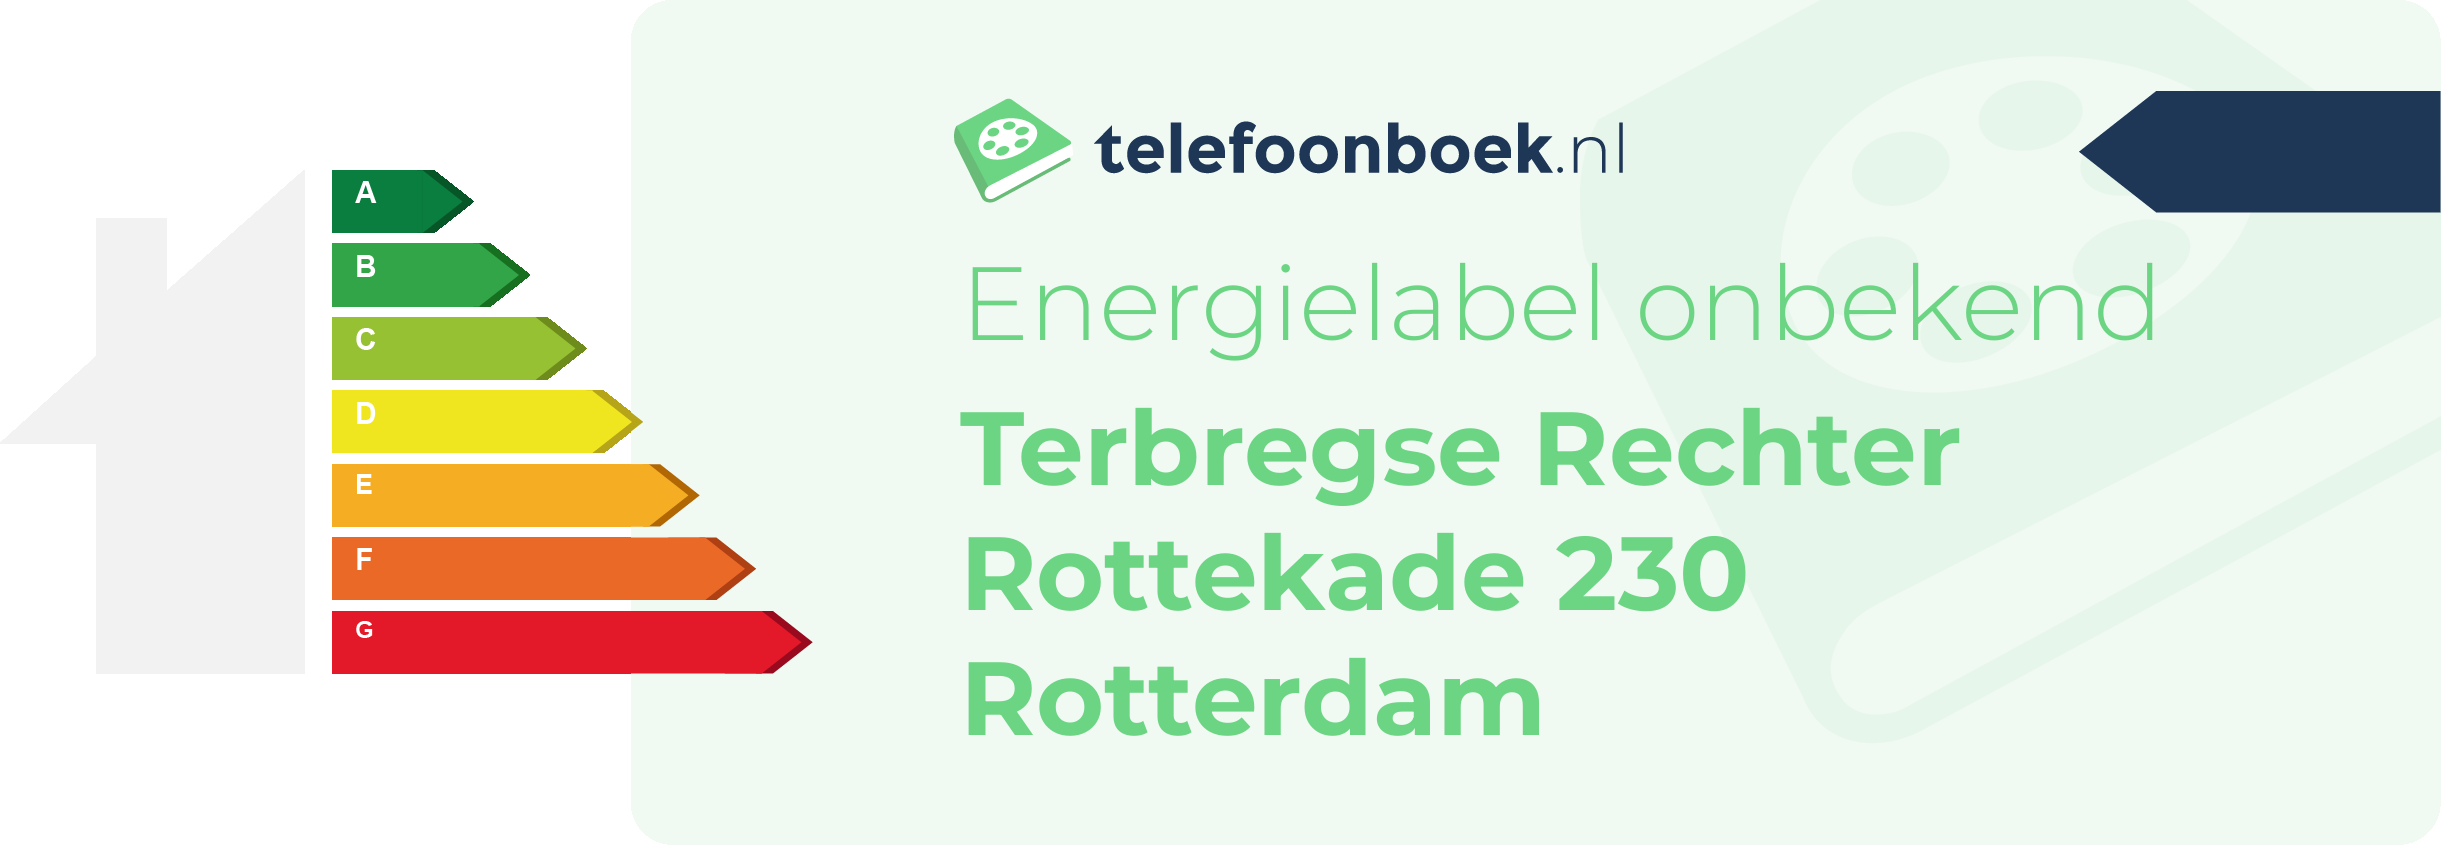 Energielabel Terbregse Rechter Rottekade 230 Rotterdam